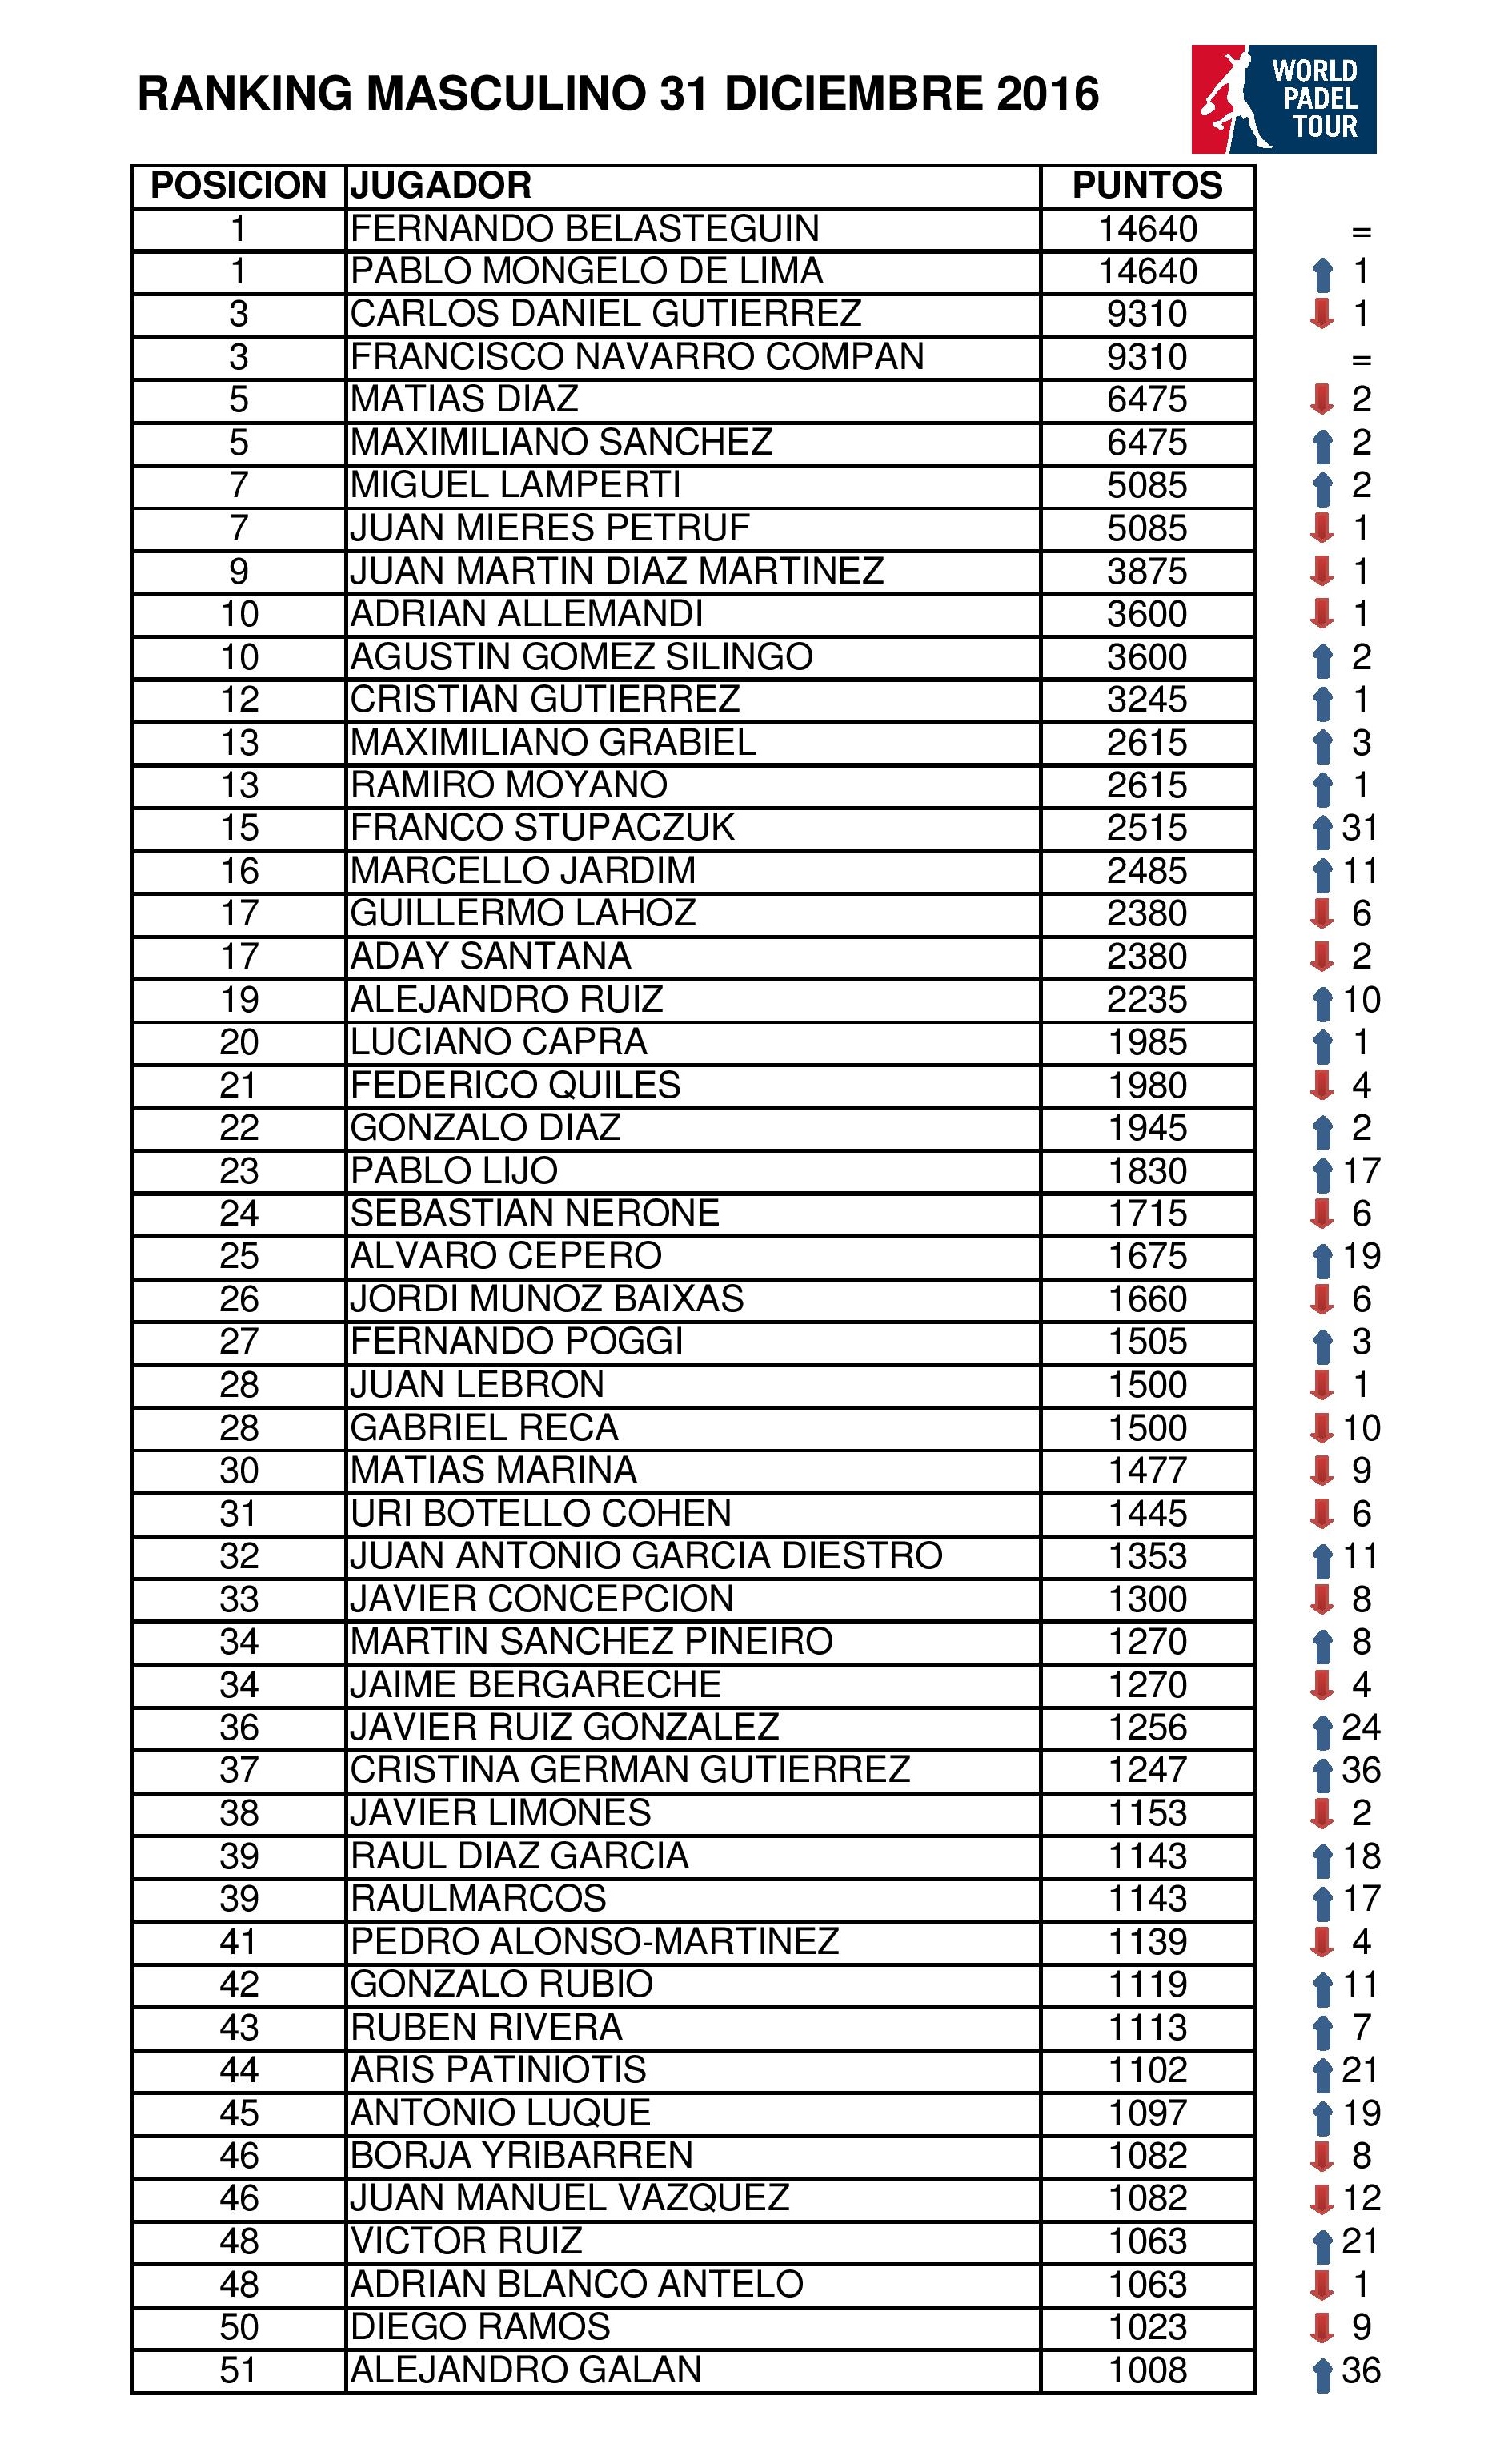 Ranking masculino WPT ascensos y descensos